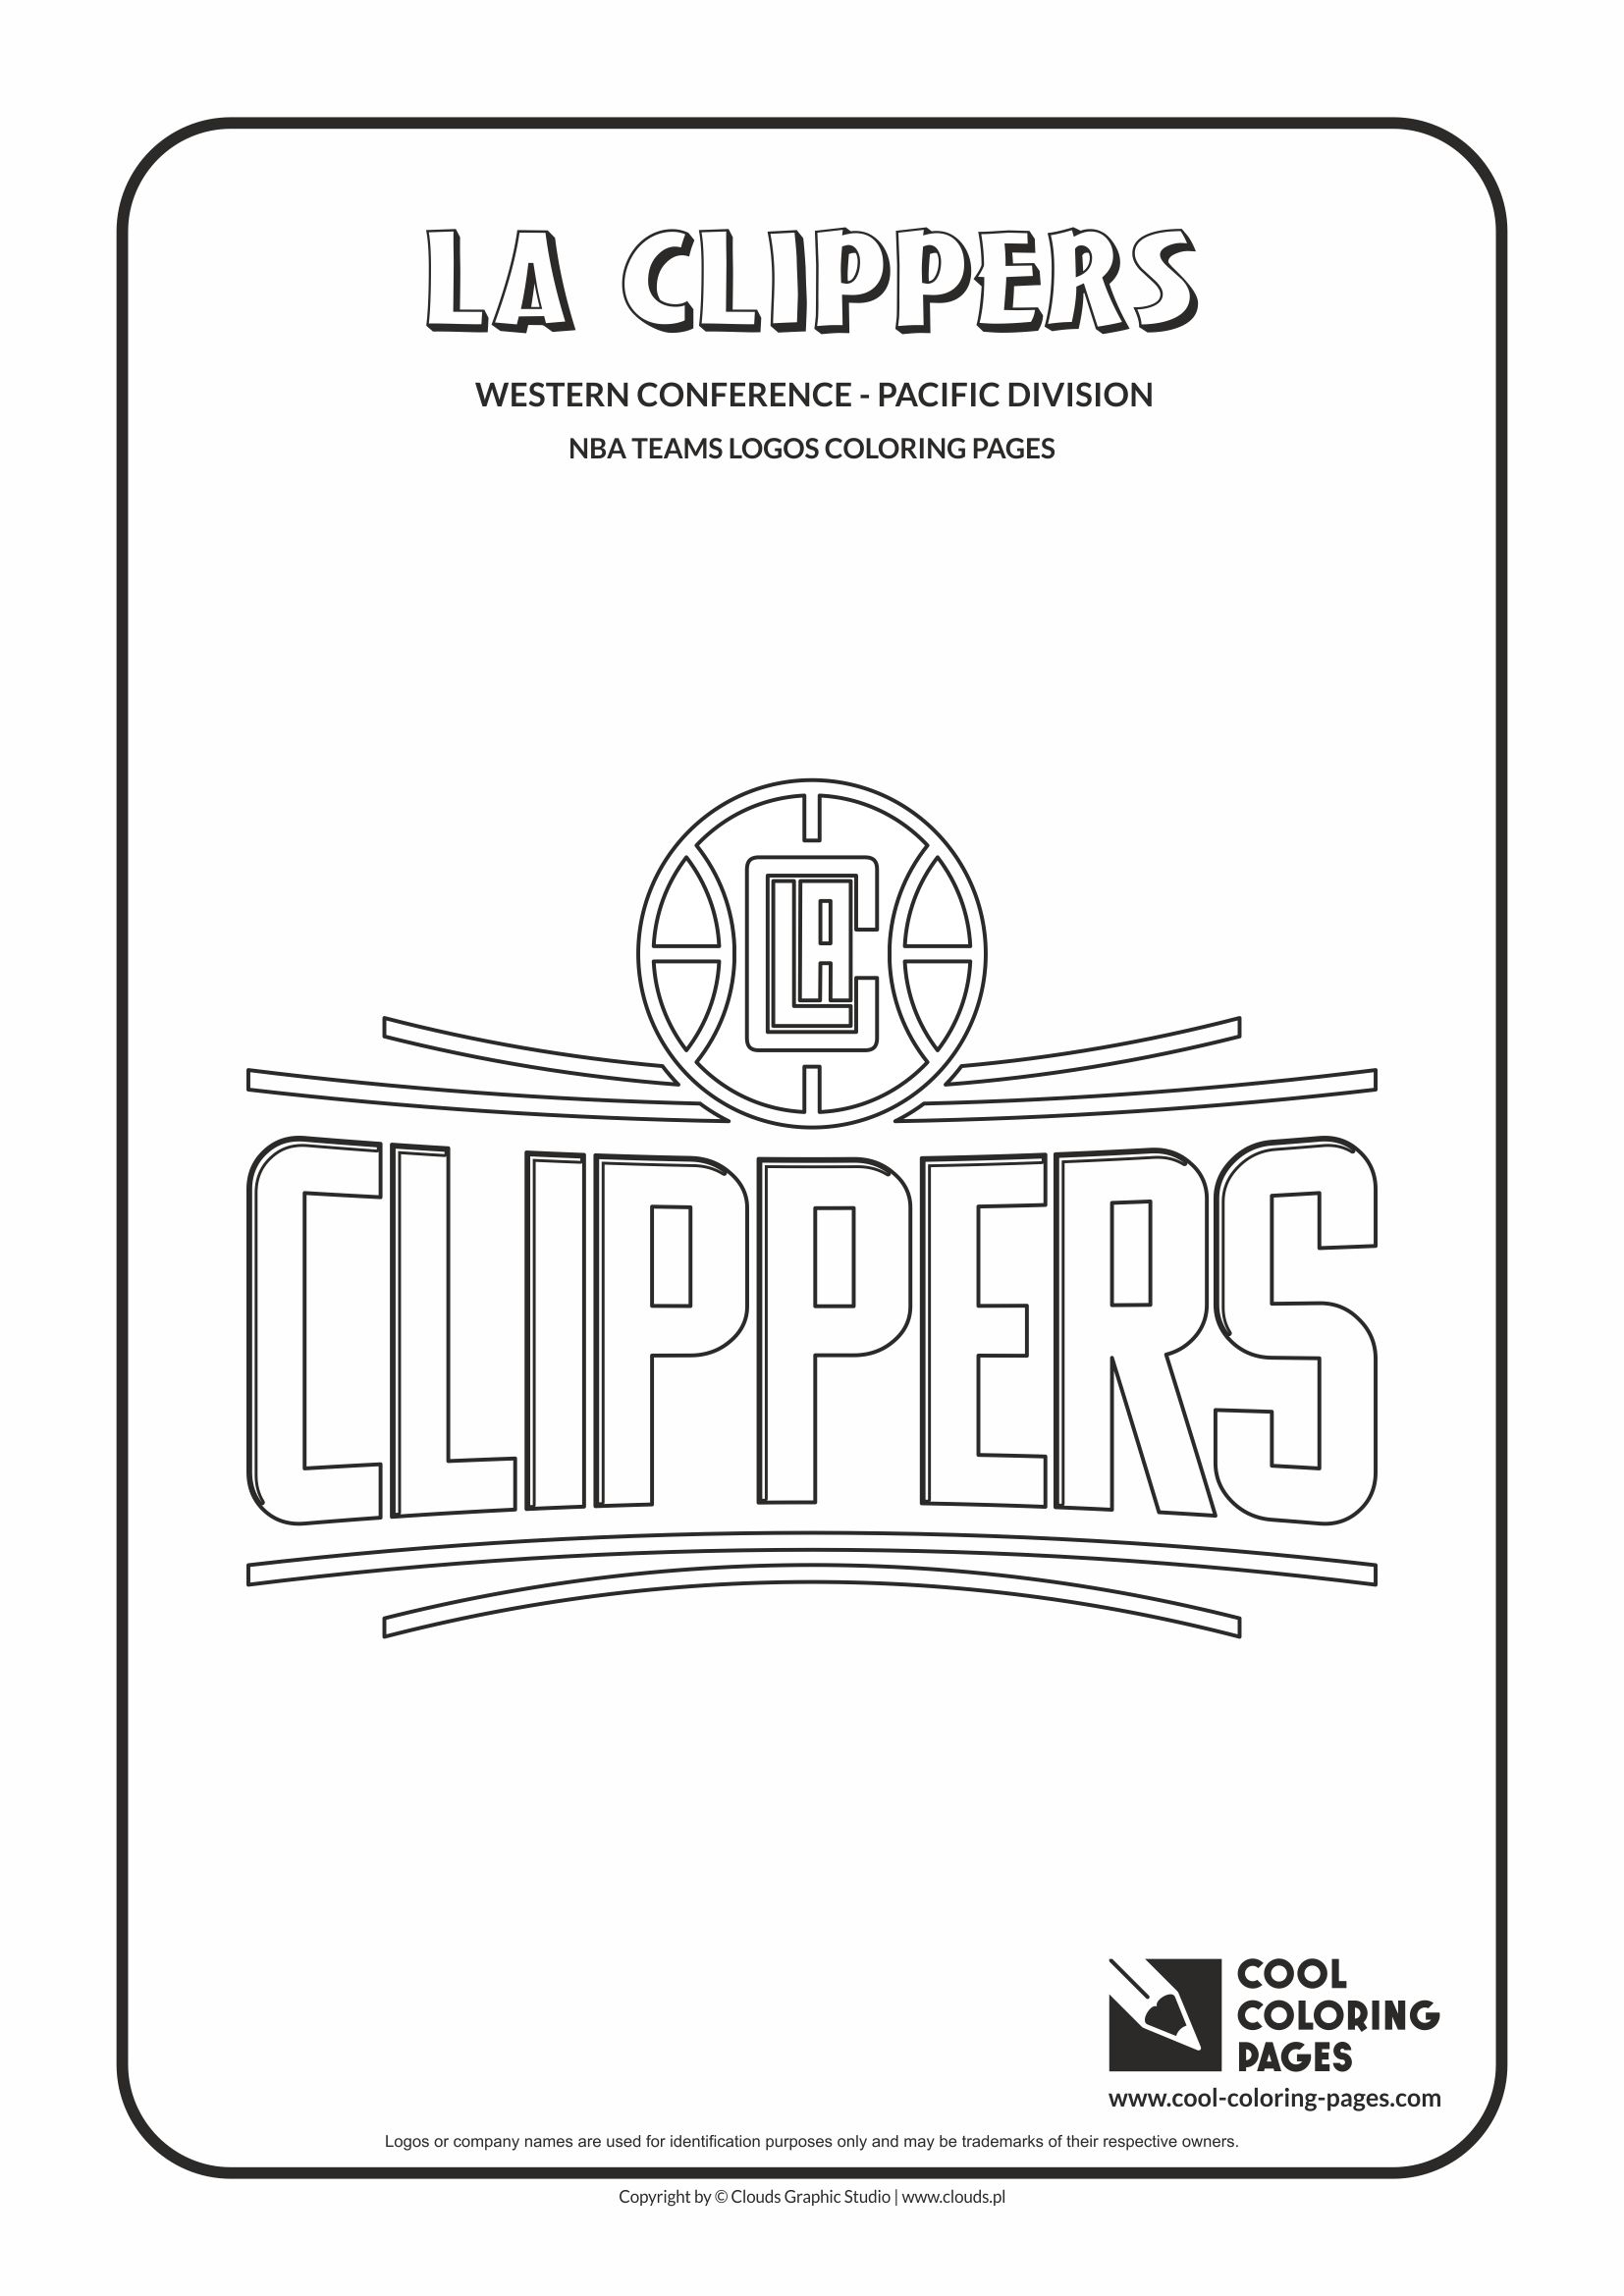 Cool Coloring Pages NBA teams logos coloring pages - Cool Coloring Pages | Free ...1654 x 2339